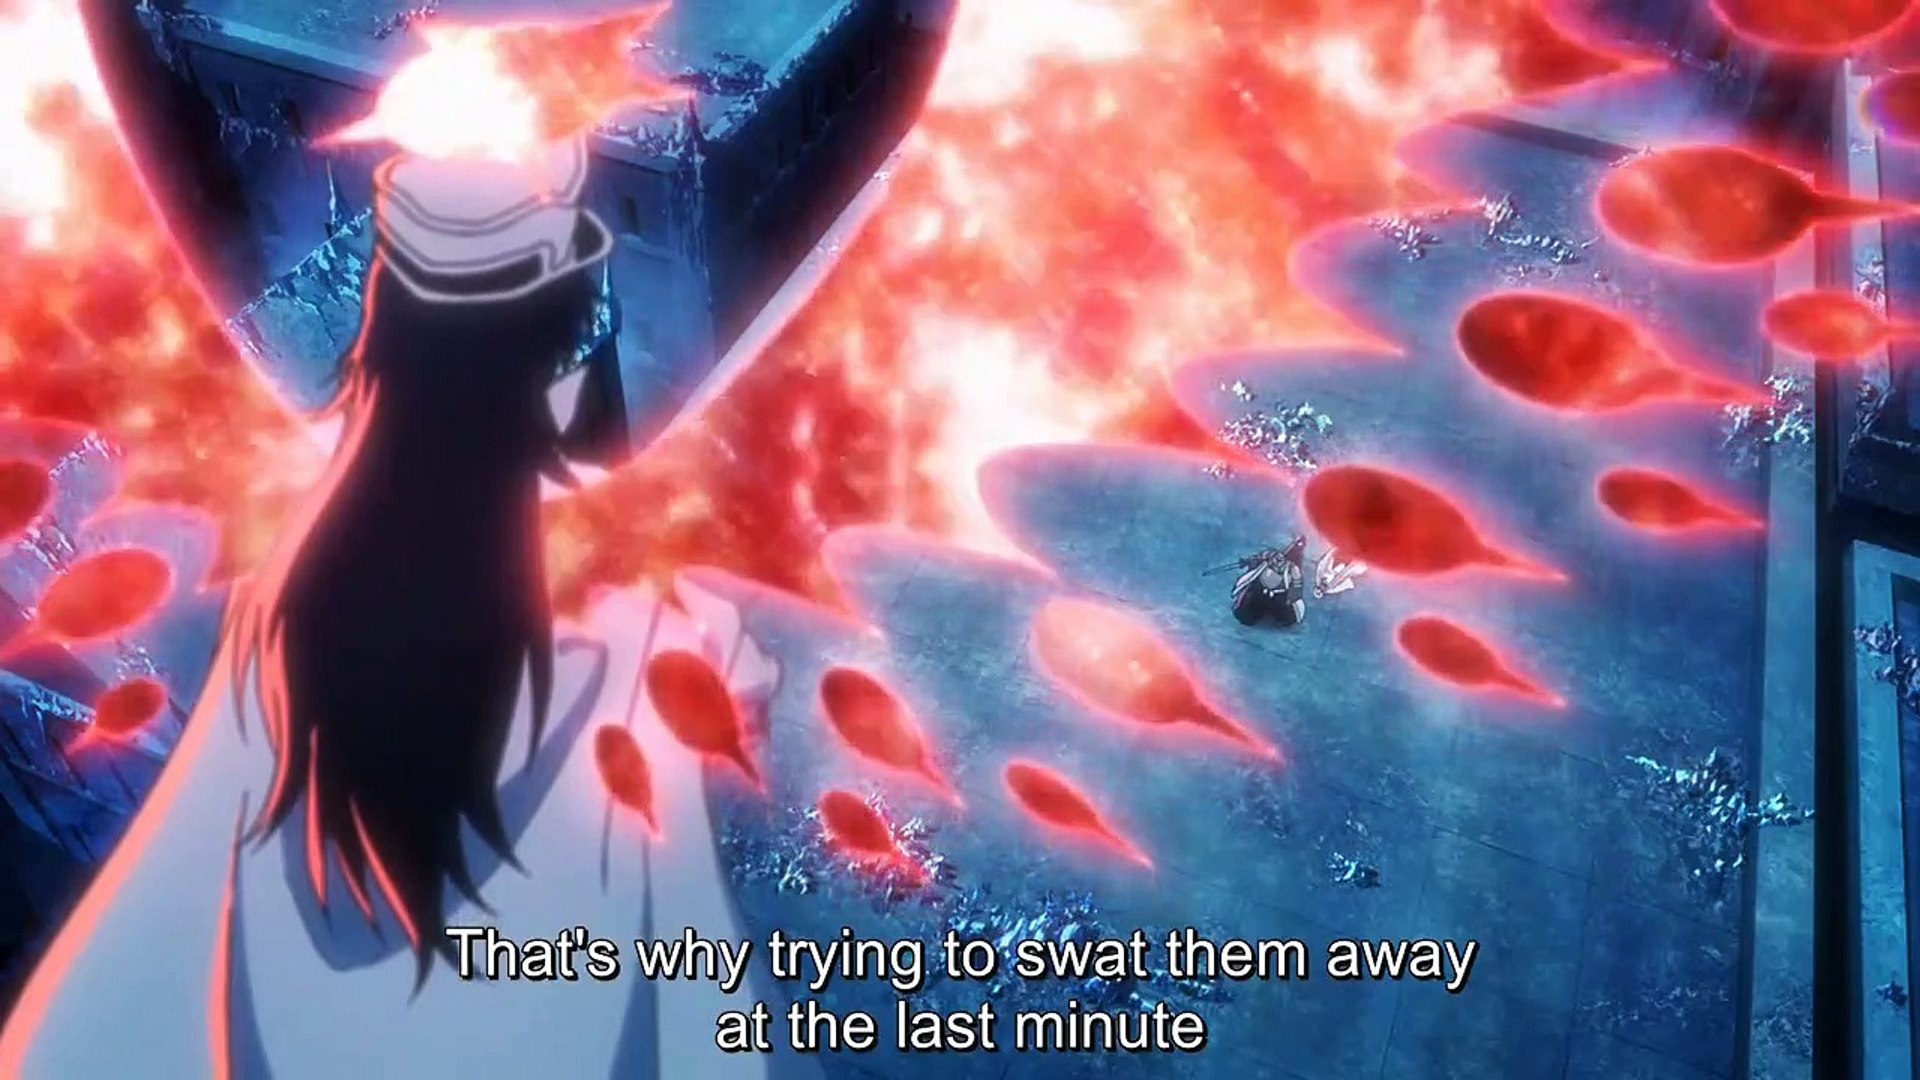 Episodes 25-26 - Bleach: Thousand-Year Blood War Season 2 - Anime News  Network